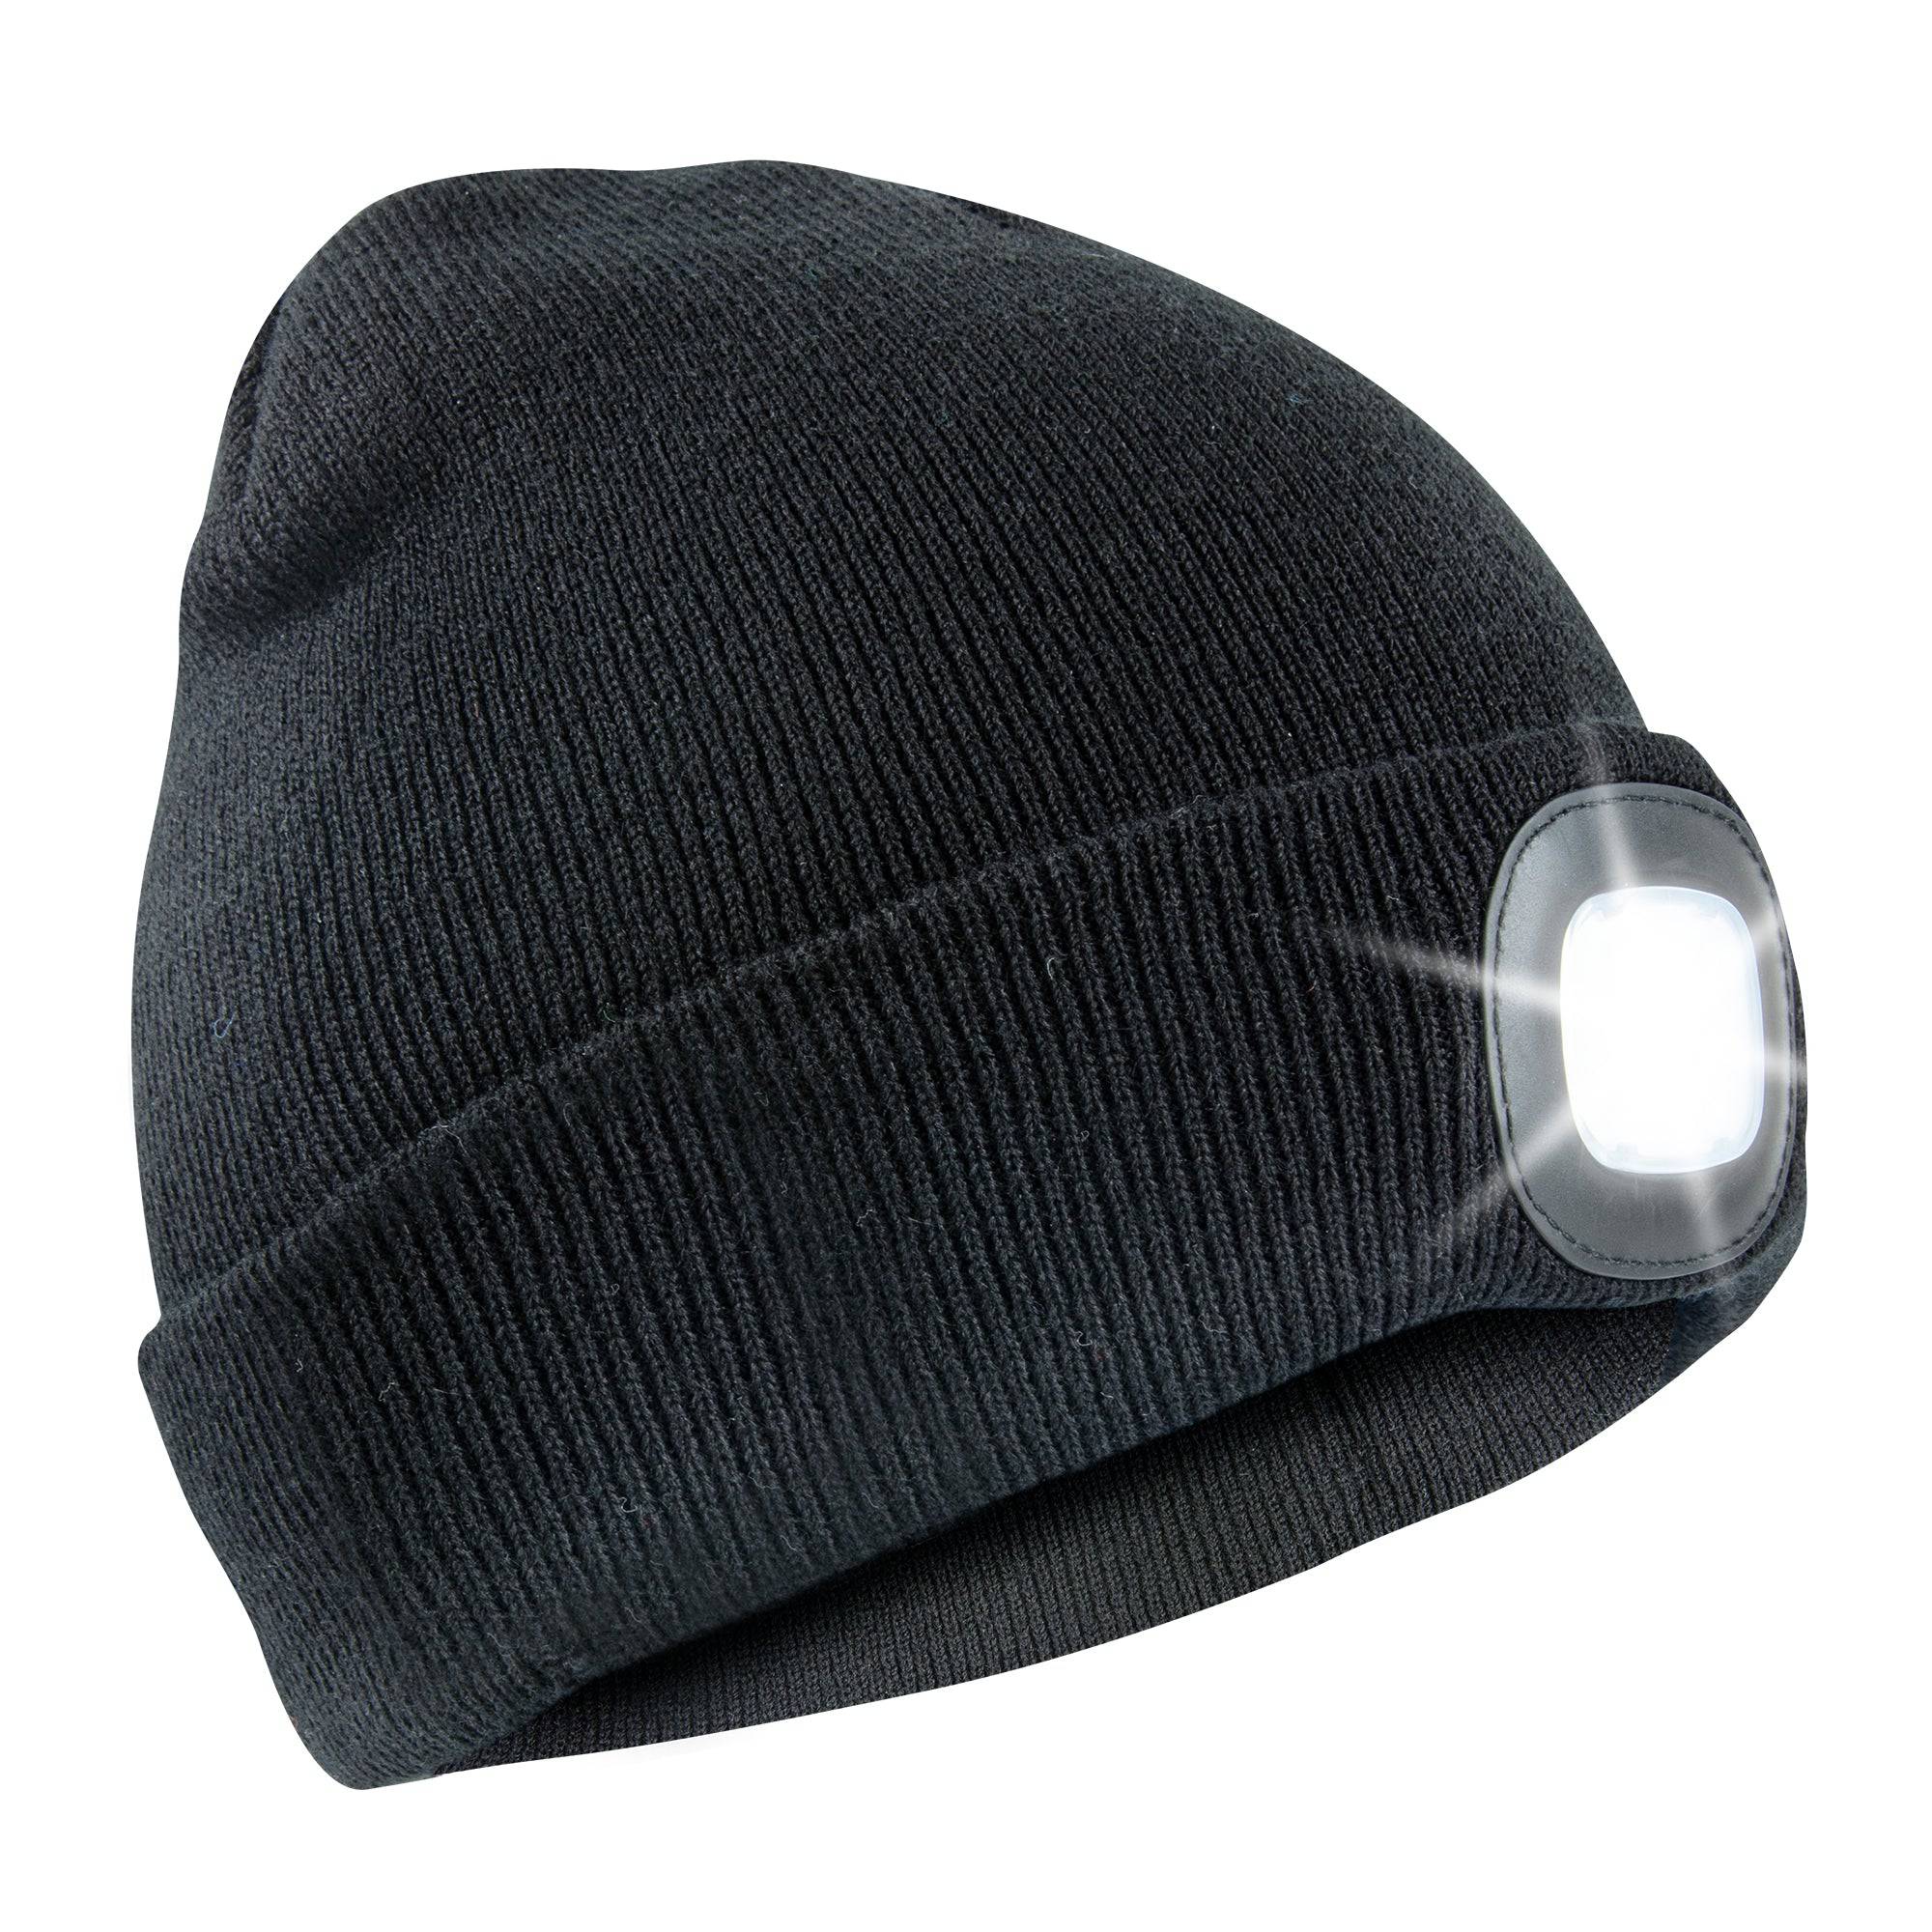 Rechargeable LED Light Thinsulate Beanie Hat (Unisex) (Black) - DSL